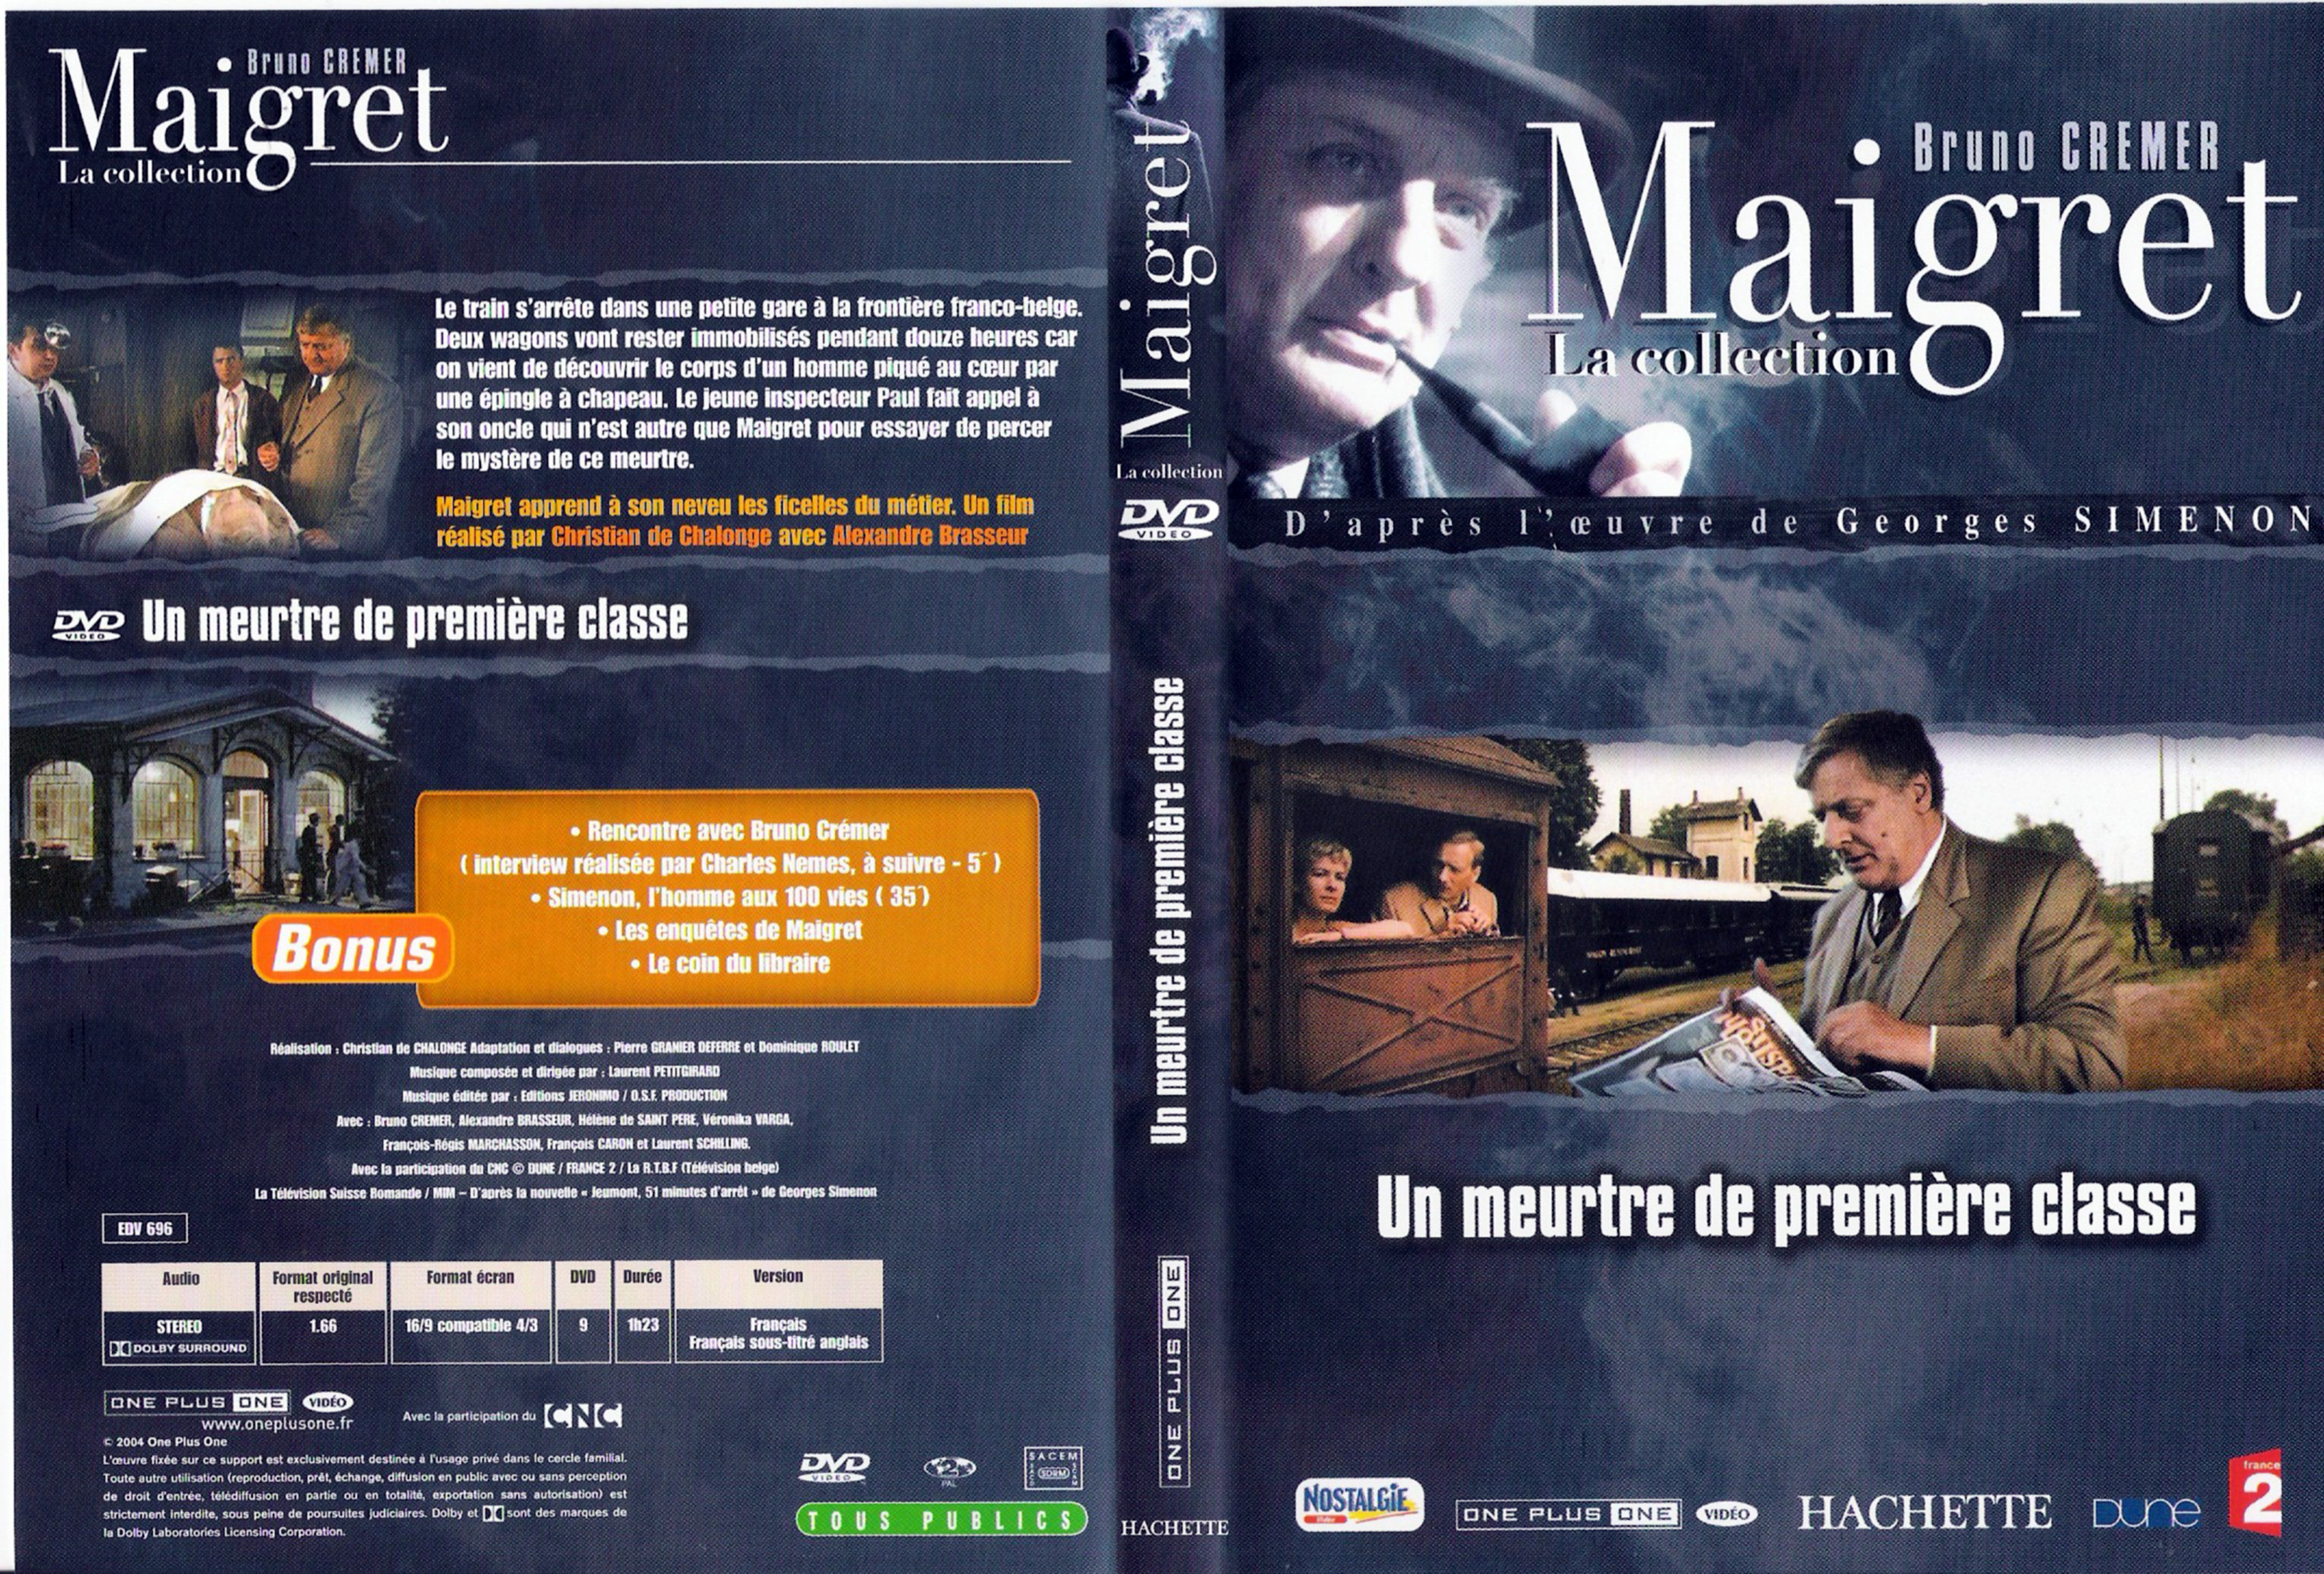 Jaquette DVD Maigret Un meurtre de 1ere classe (Bruno Cremer)